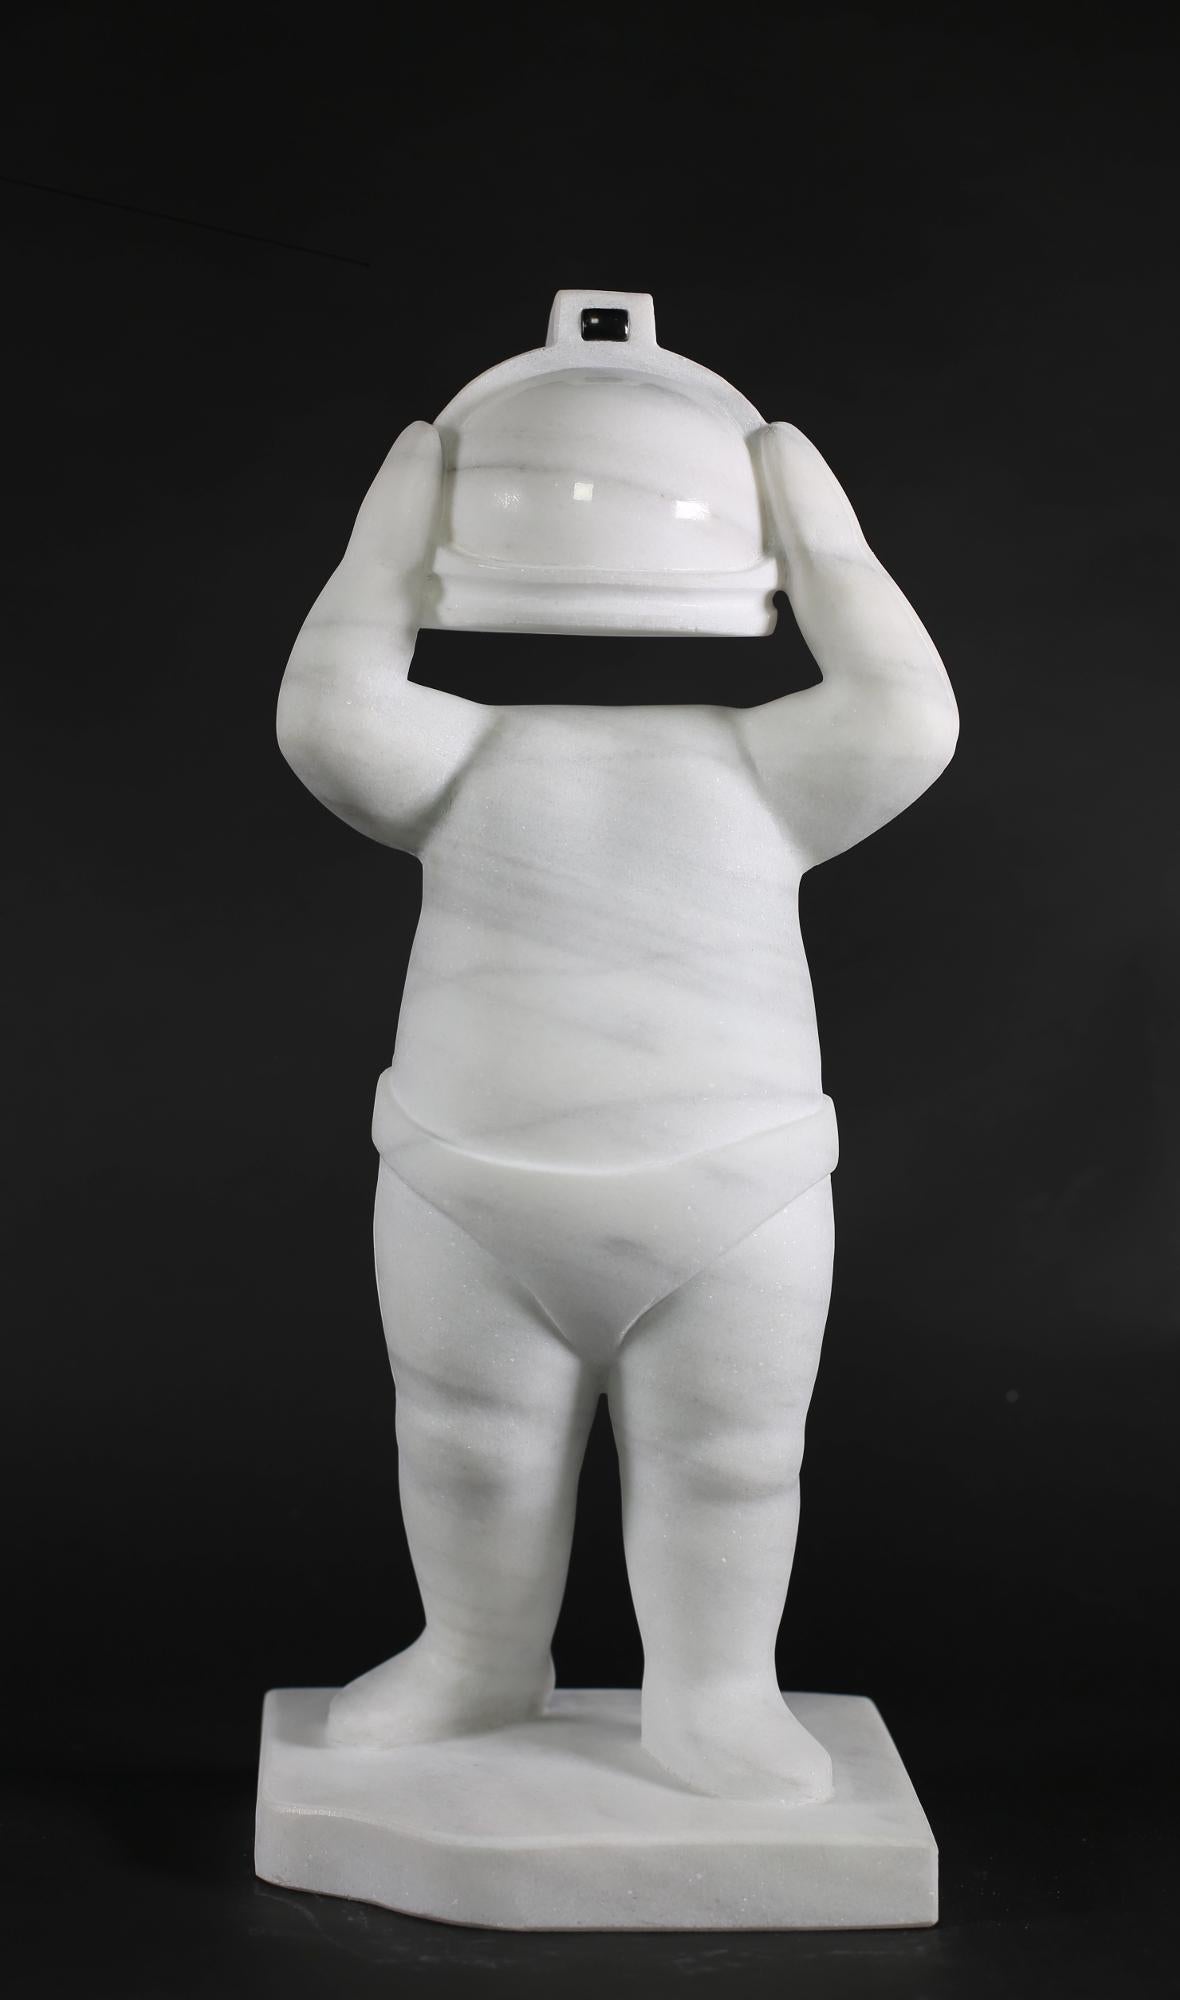 Mario Romero Fernández Figurative Sculpture - New Age Explorers. Nº1 Without Neck. Figurative Marble Sculpture by Mario Romero